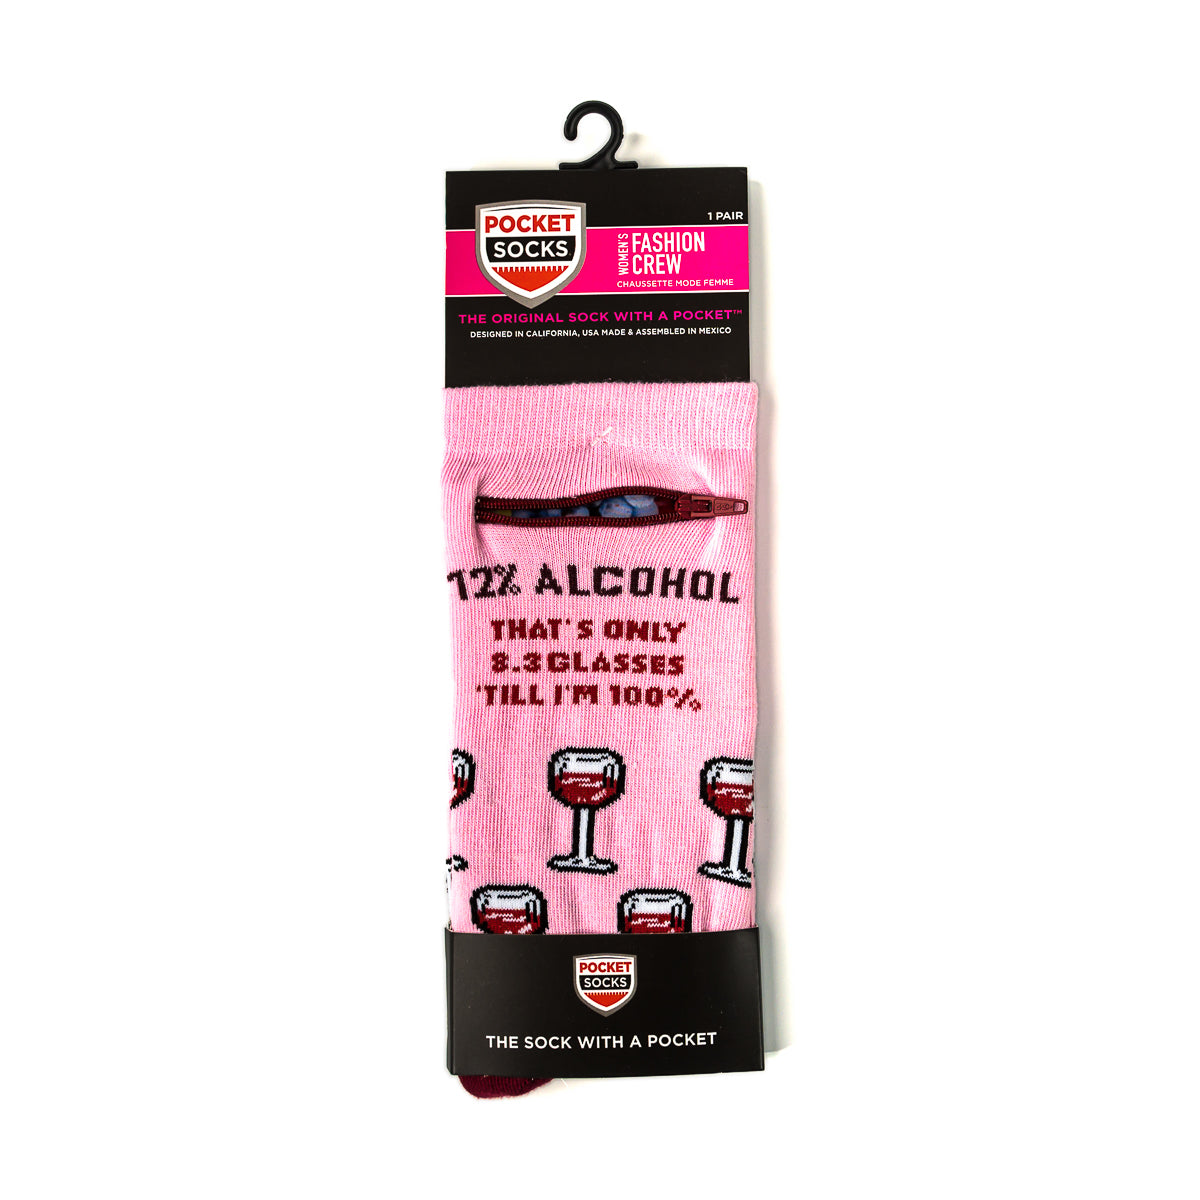 Pocket Socks® 12% Alcohol Wine on PInk, Womens